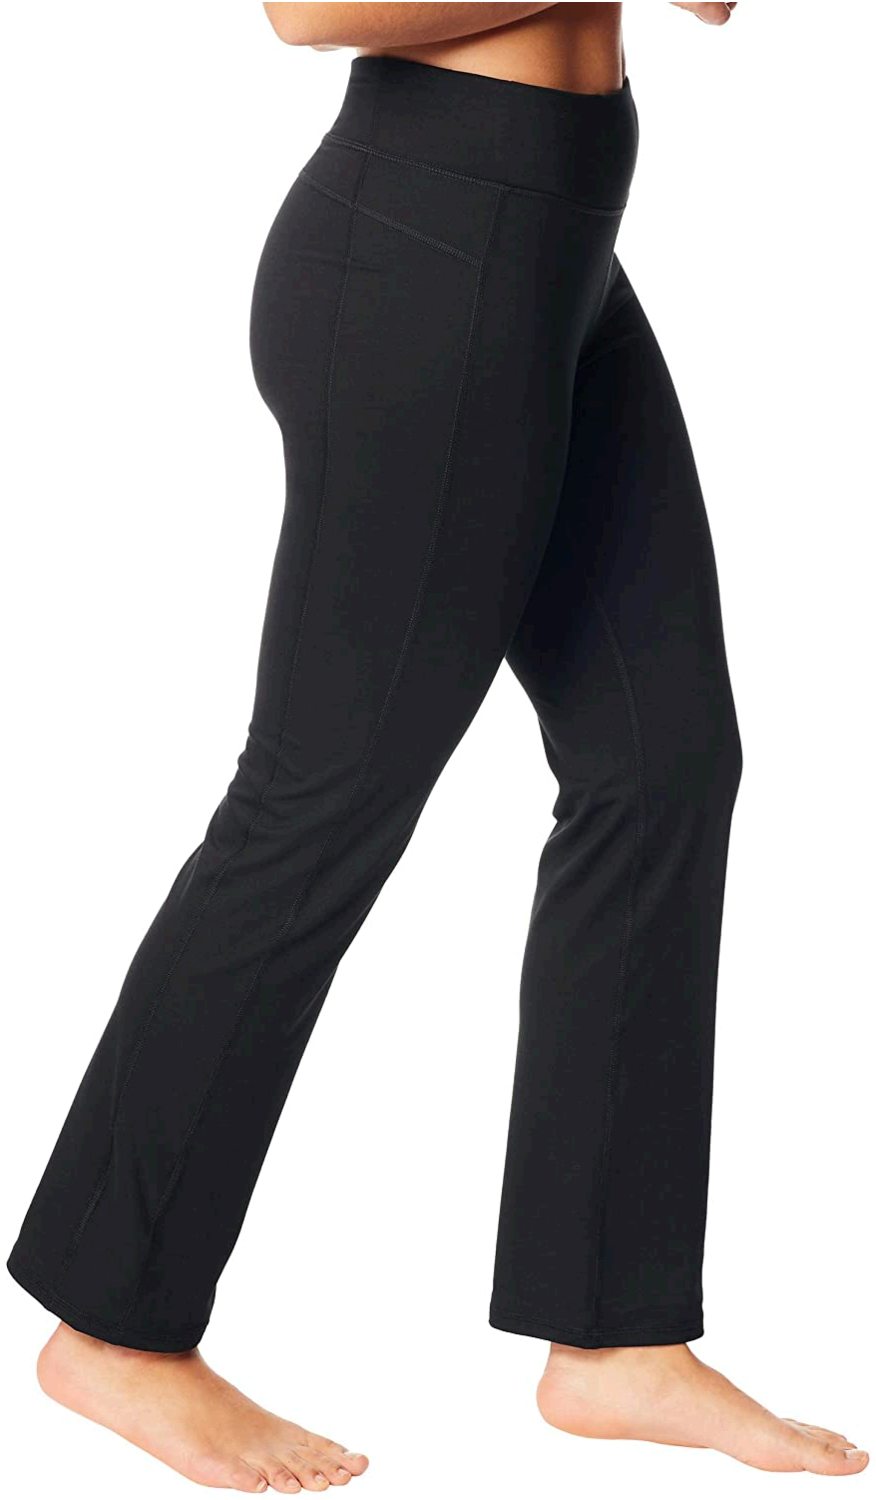 C9 Champion Women's Curvy Fit Yoga Pant, Ebony - Short Length, Size ...